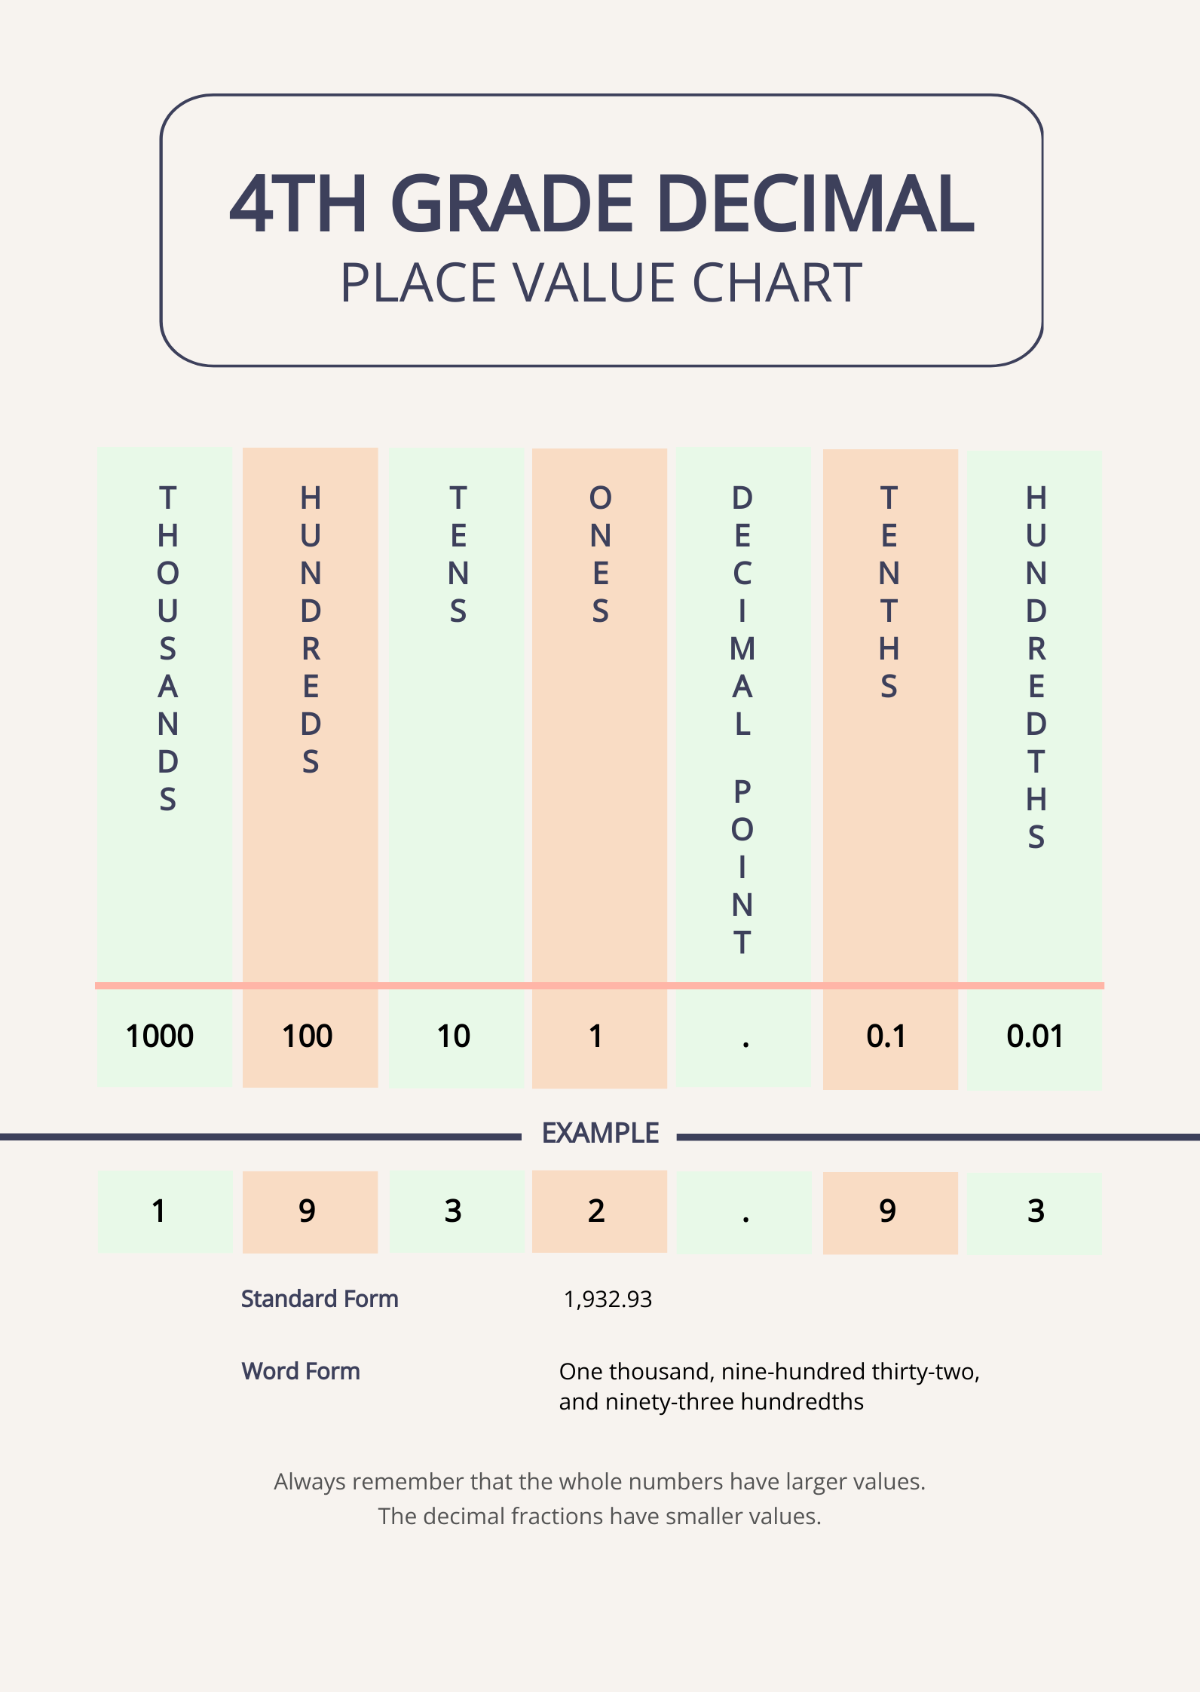 4th Grade Decimal Place Value Chart